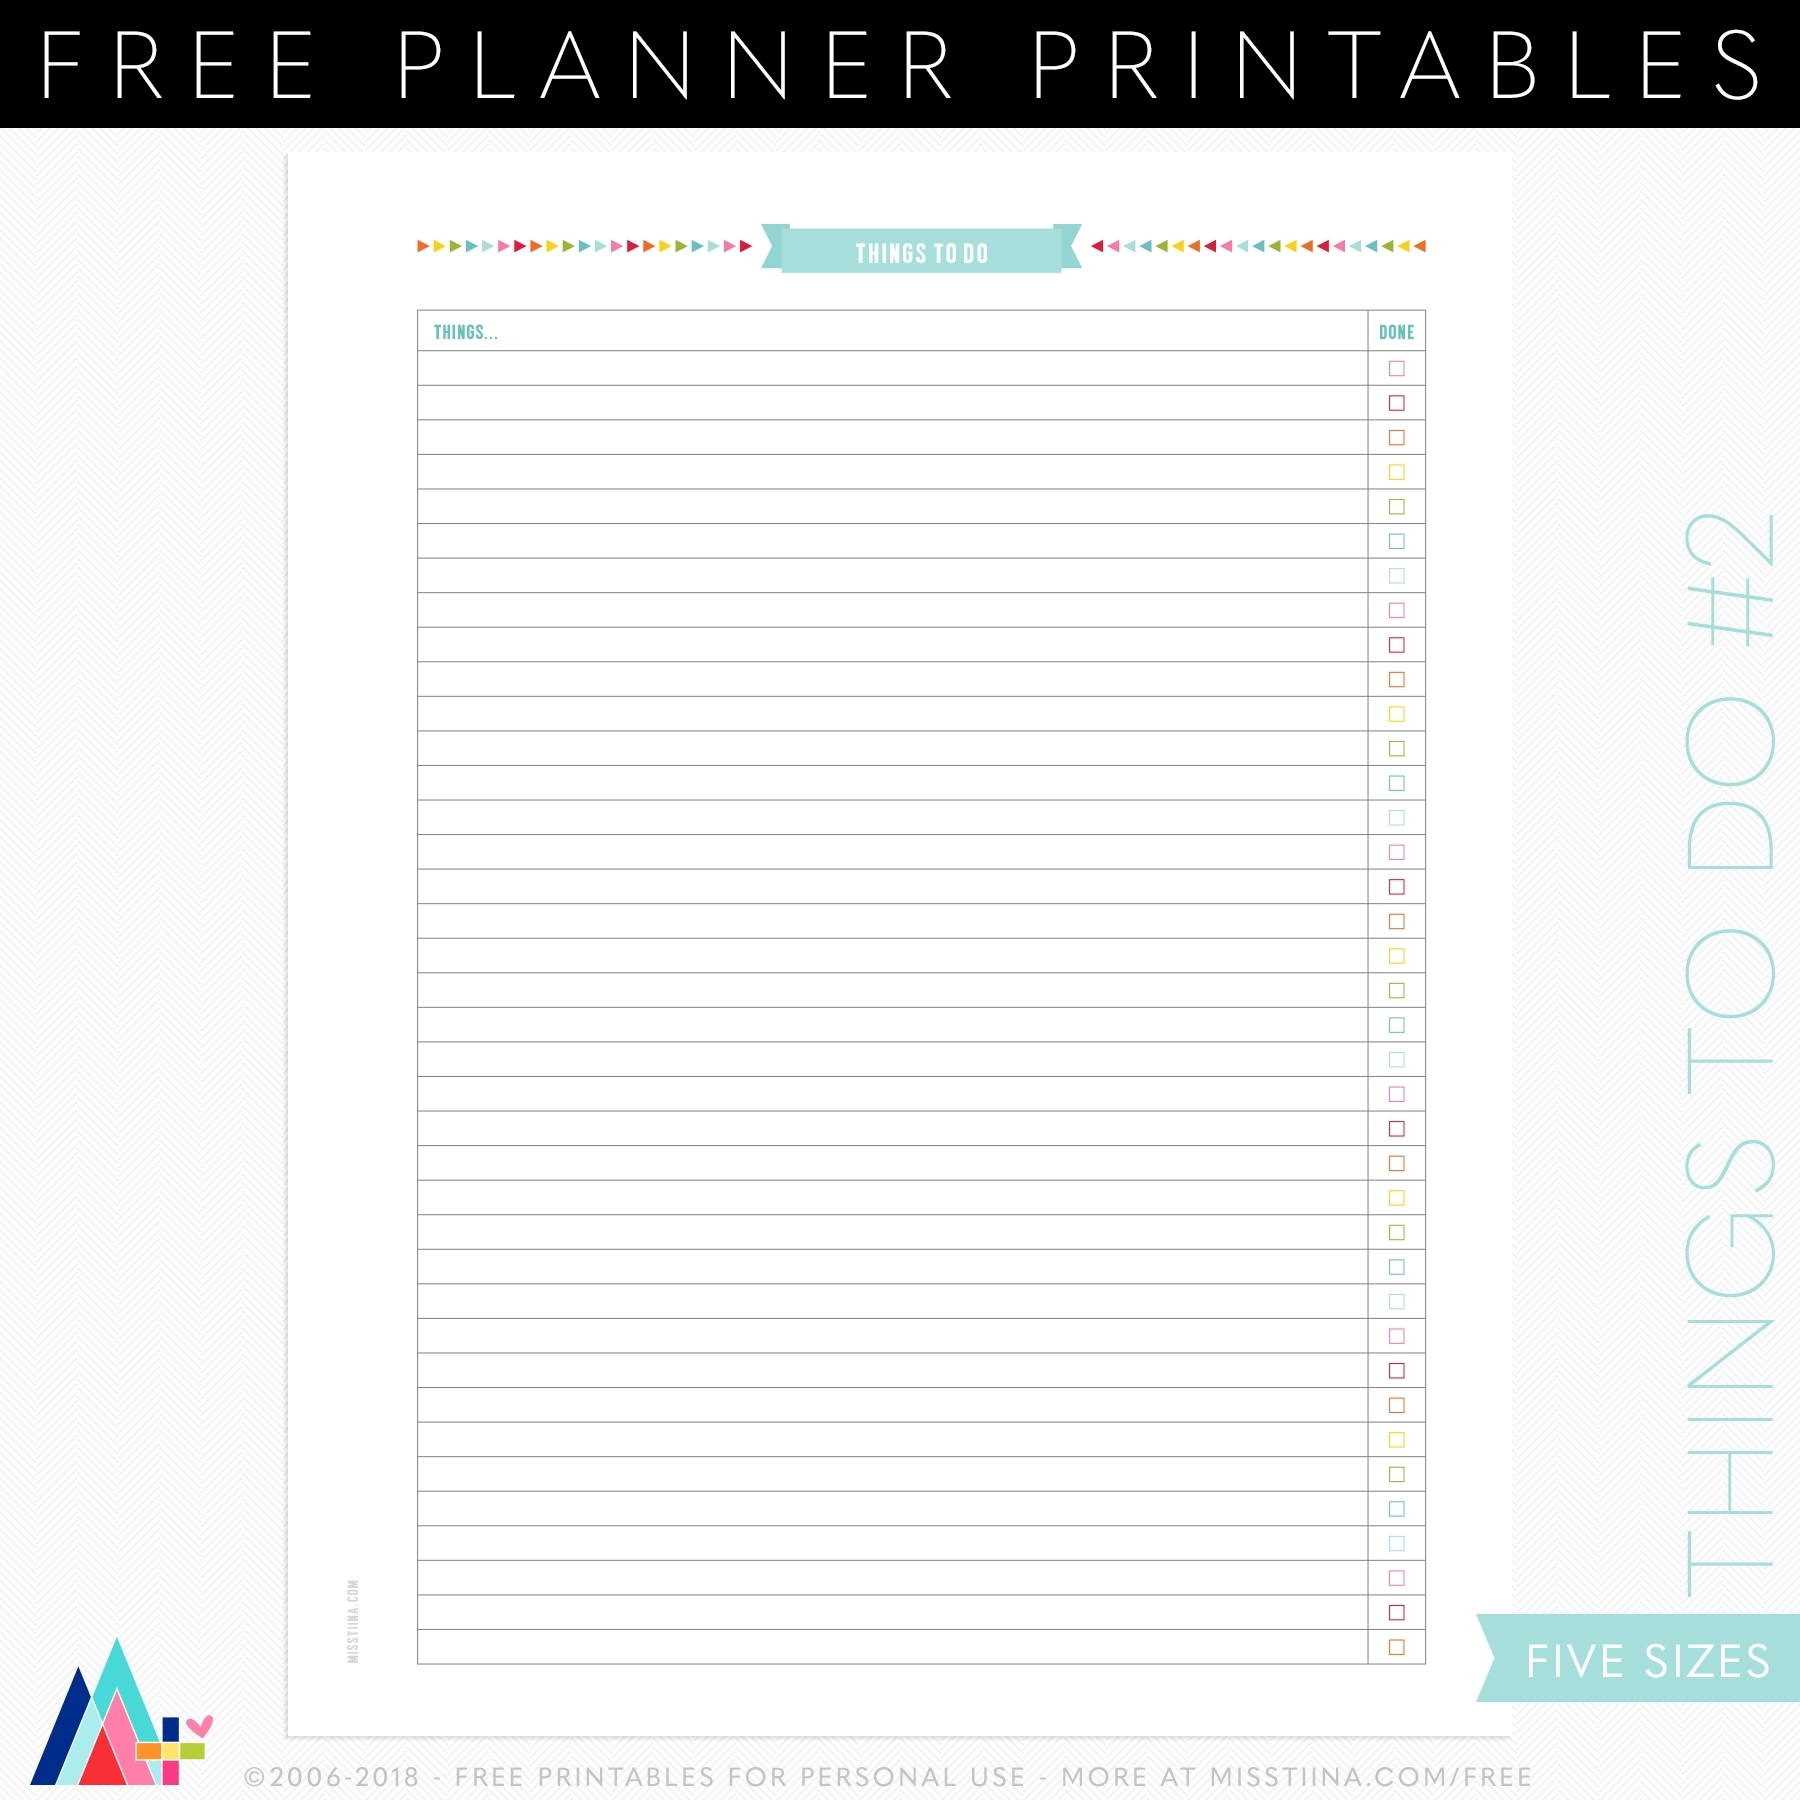 Planner Printables | Misstiina intended for 5X8 Calendar Planner Templates Printable